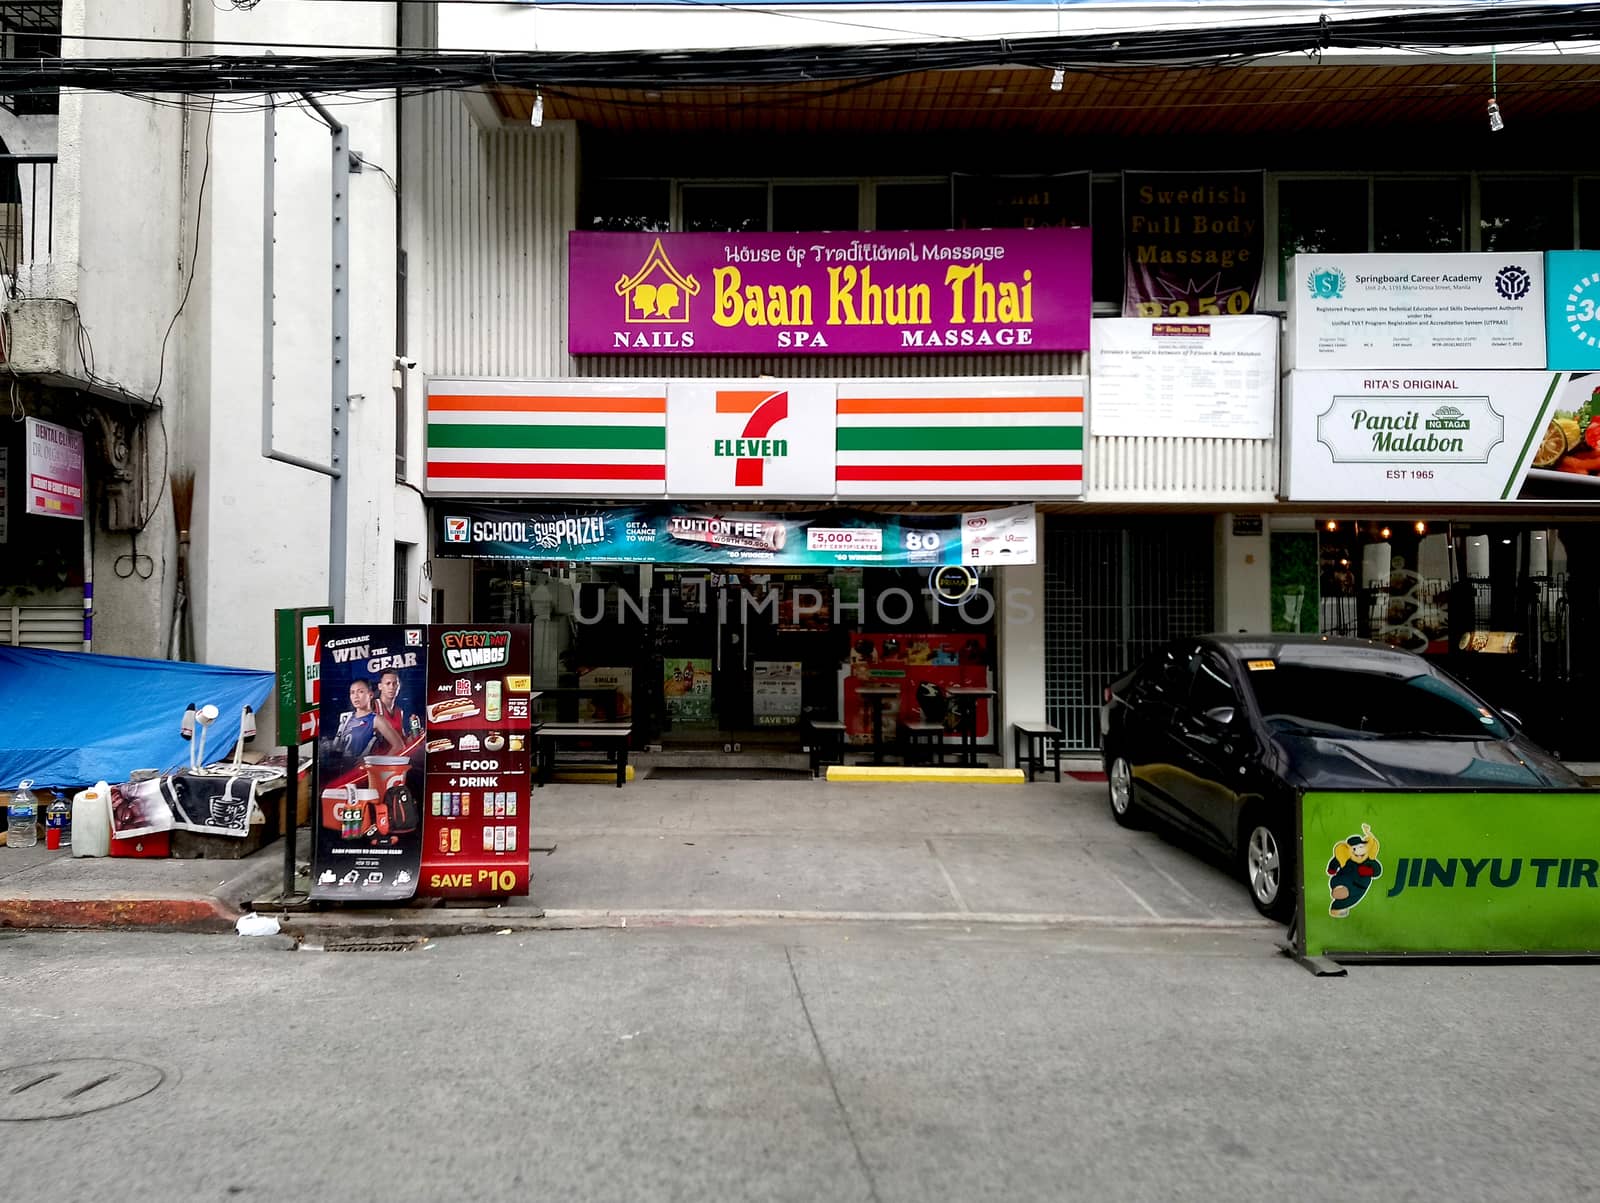 7 Eleven convenience store facade in Manila, Philippines by imwaltersy